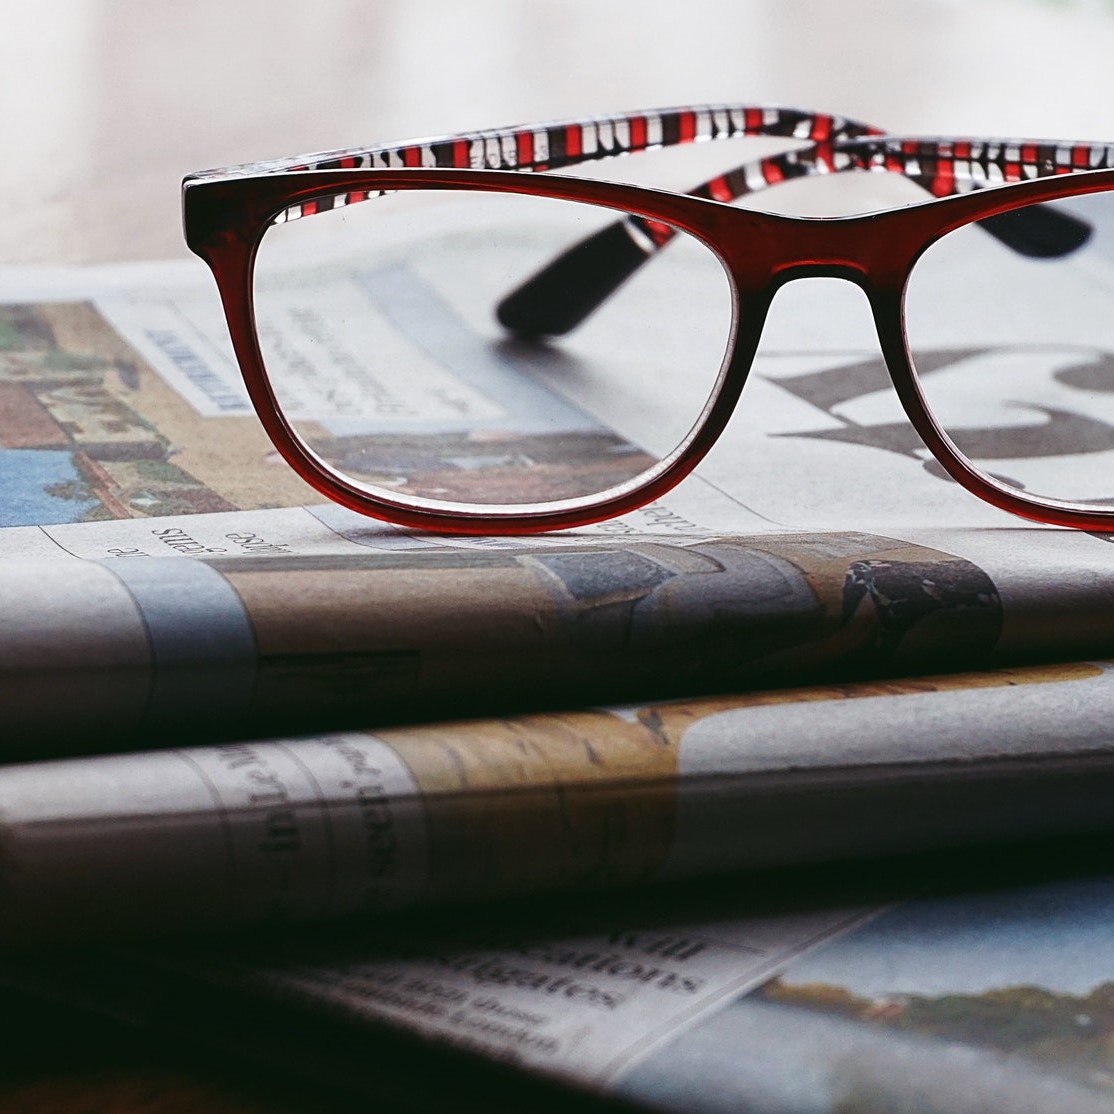 Glasses lying on newspapers